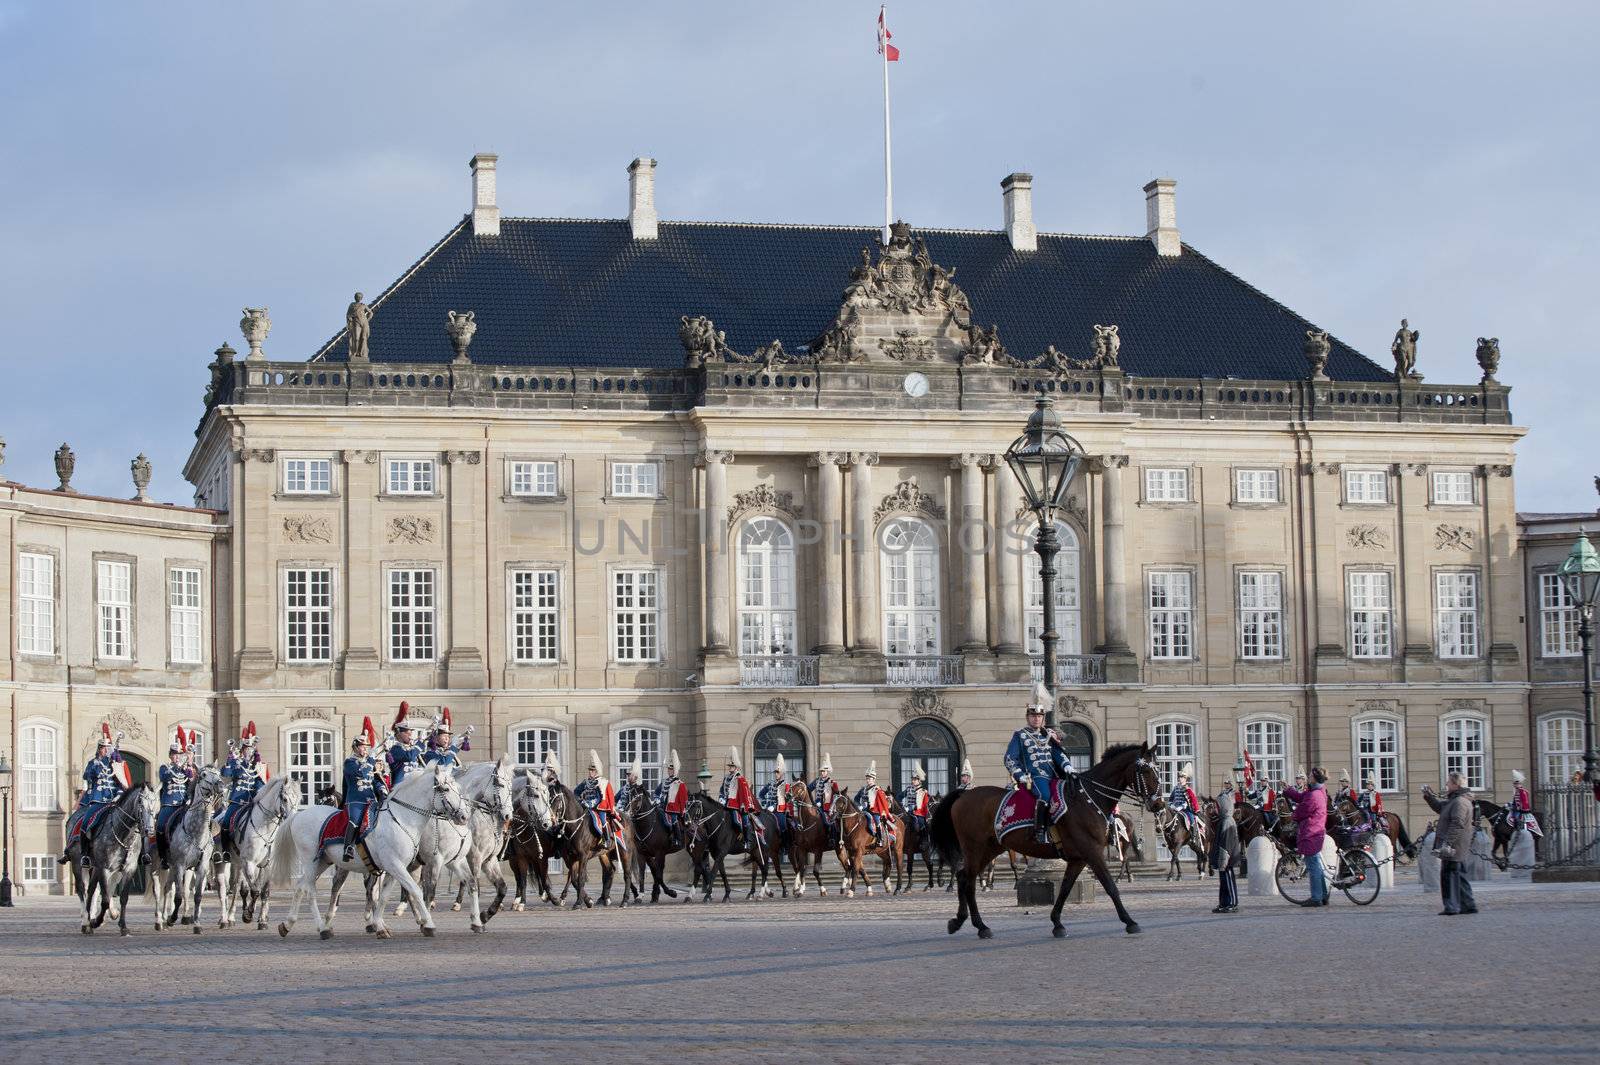  Royal Danish guard by Alenmax